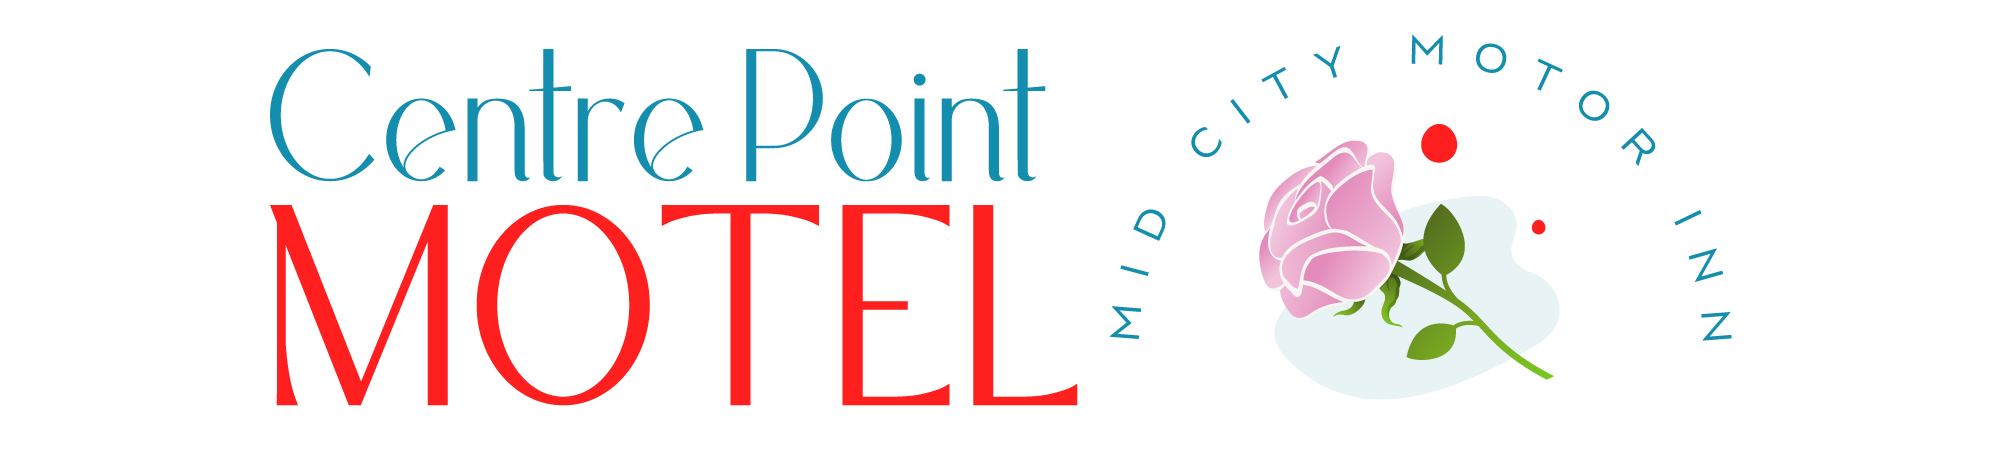 centre point motel logo